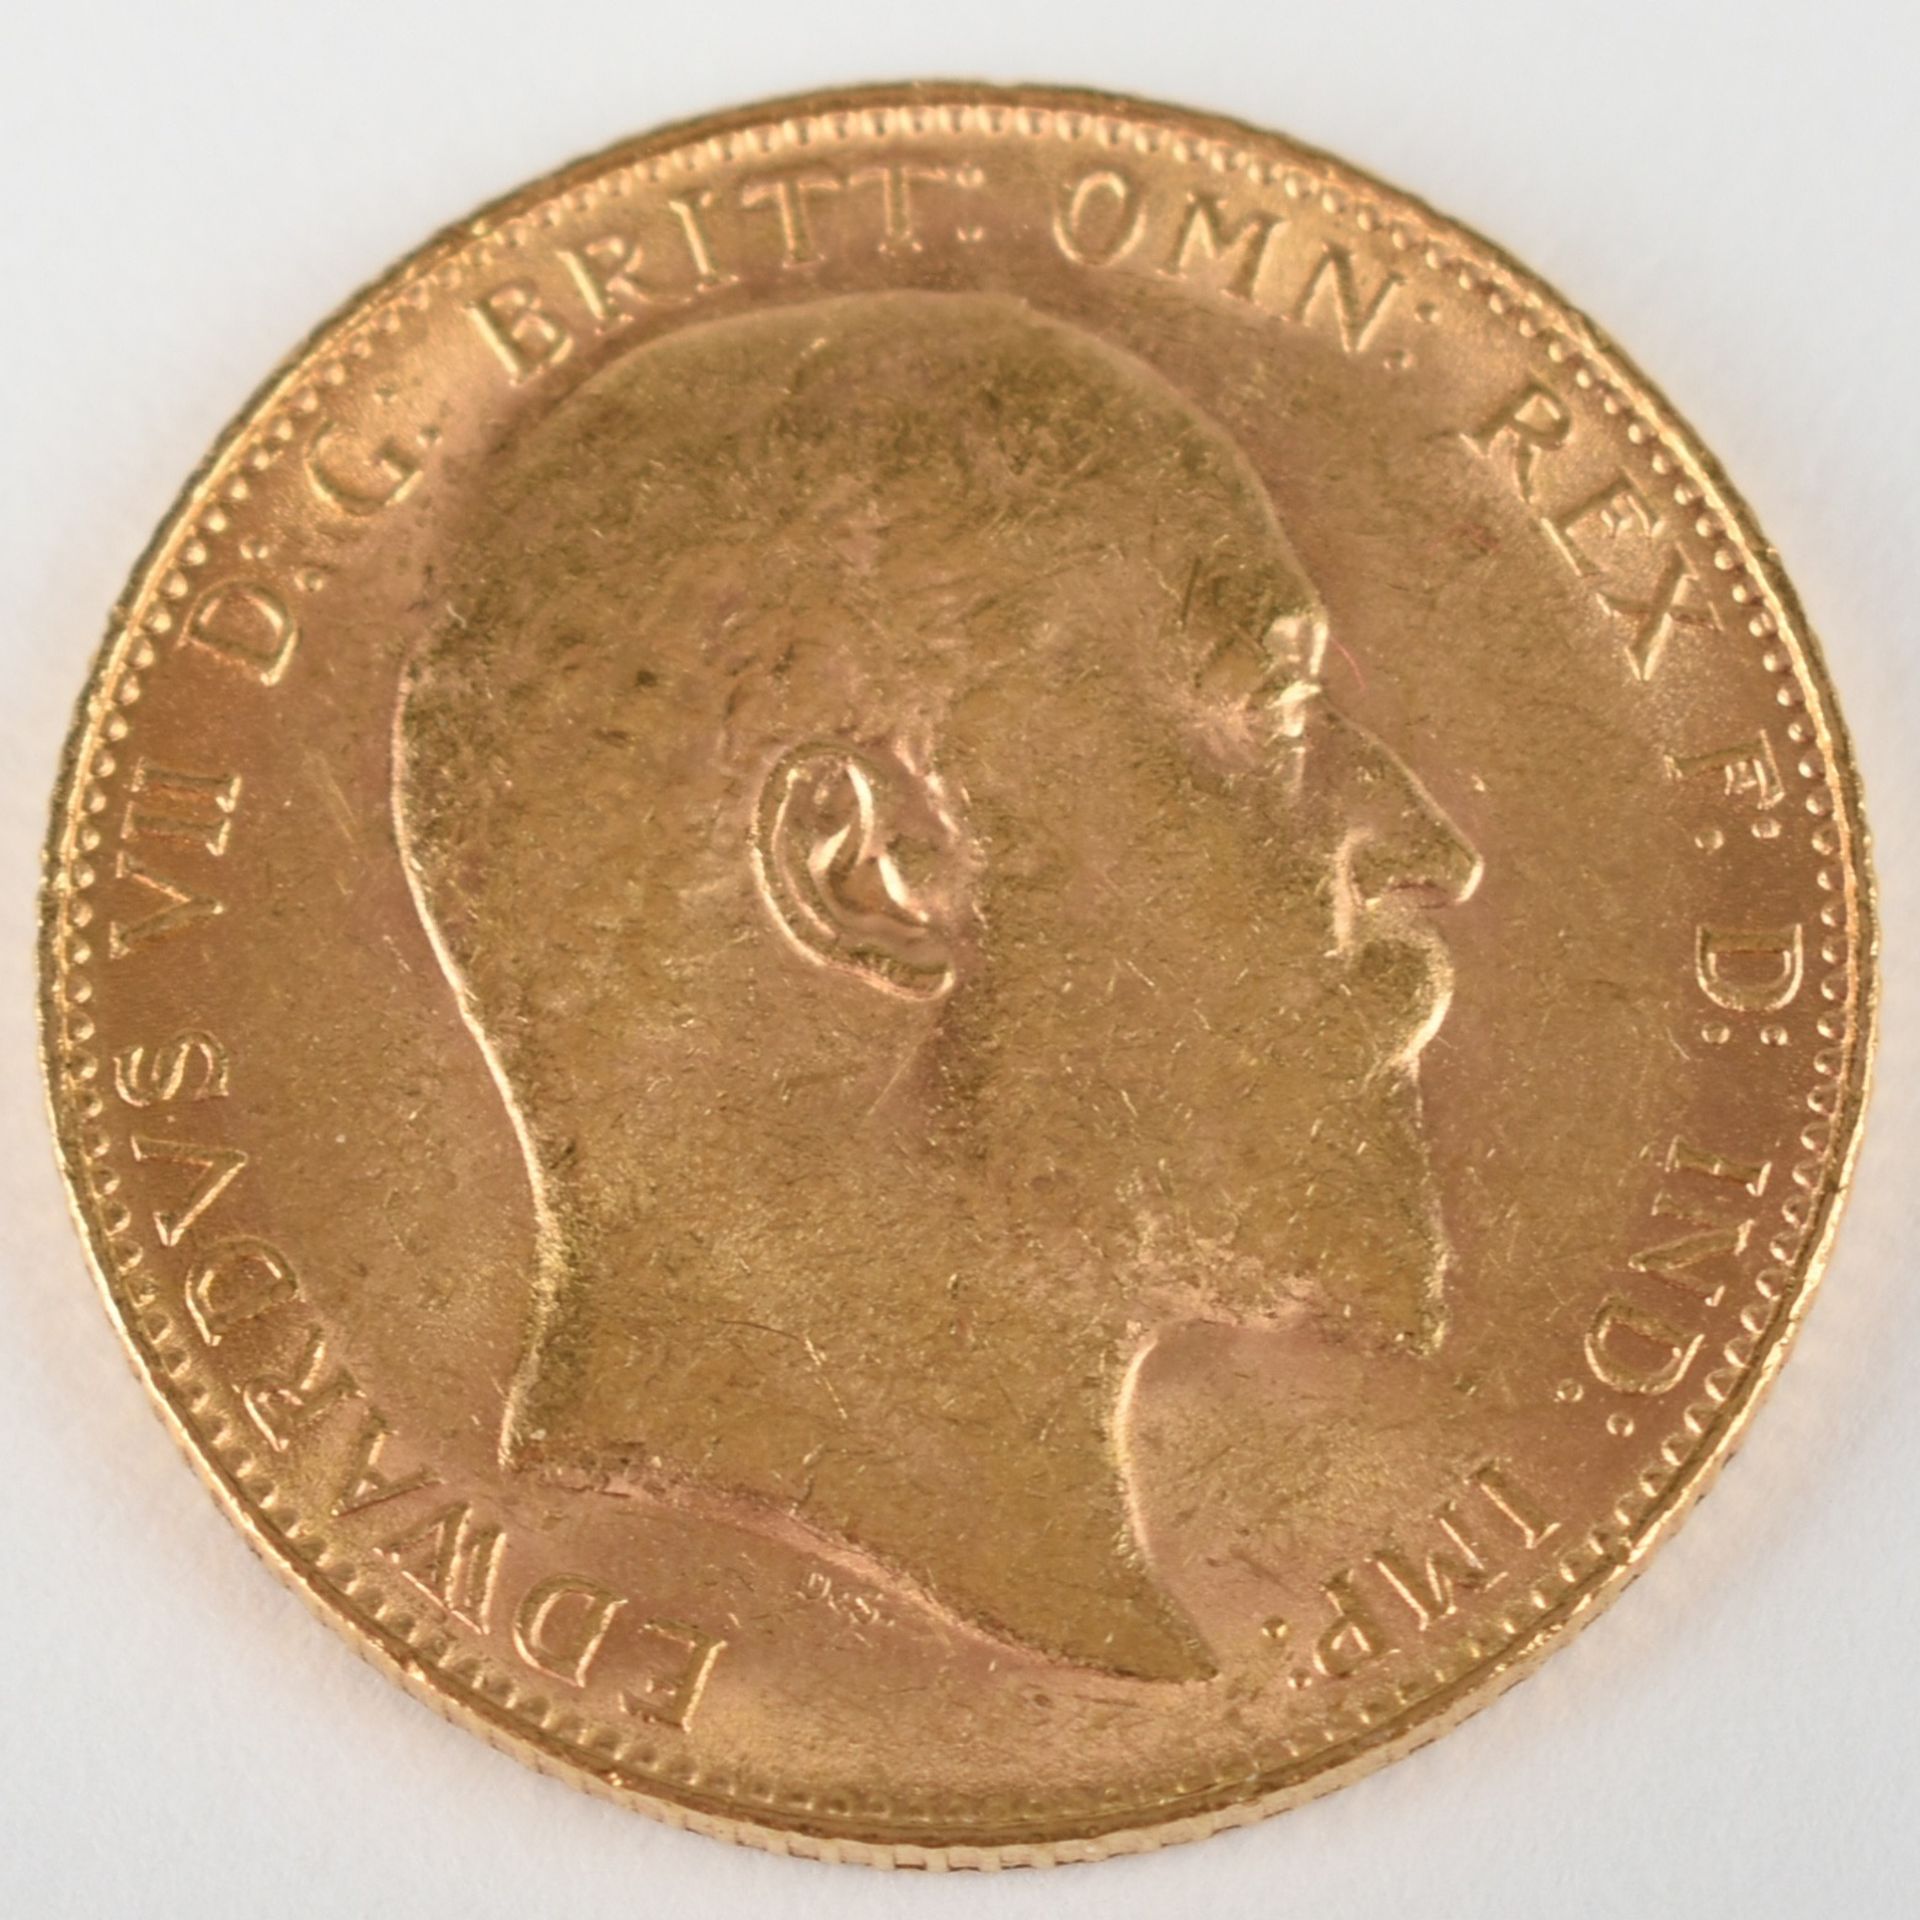 Goldmünze Großbritannien 1910 Sovereign in Gold, 916/1000, 7,988 g, D ca. 22 mm, av. König George V. - Bild 3 aus 3